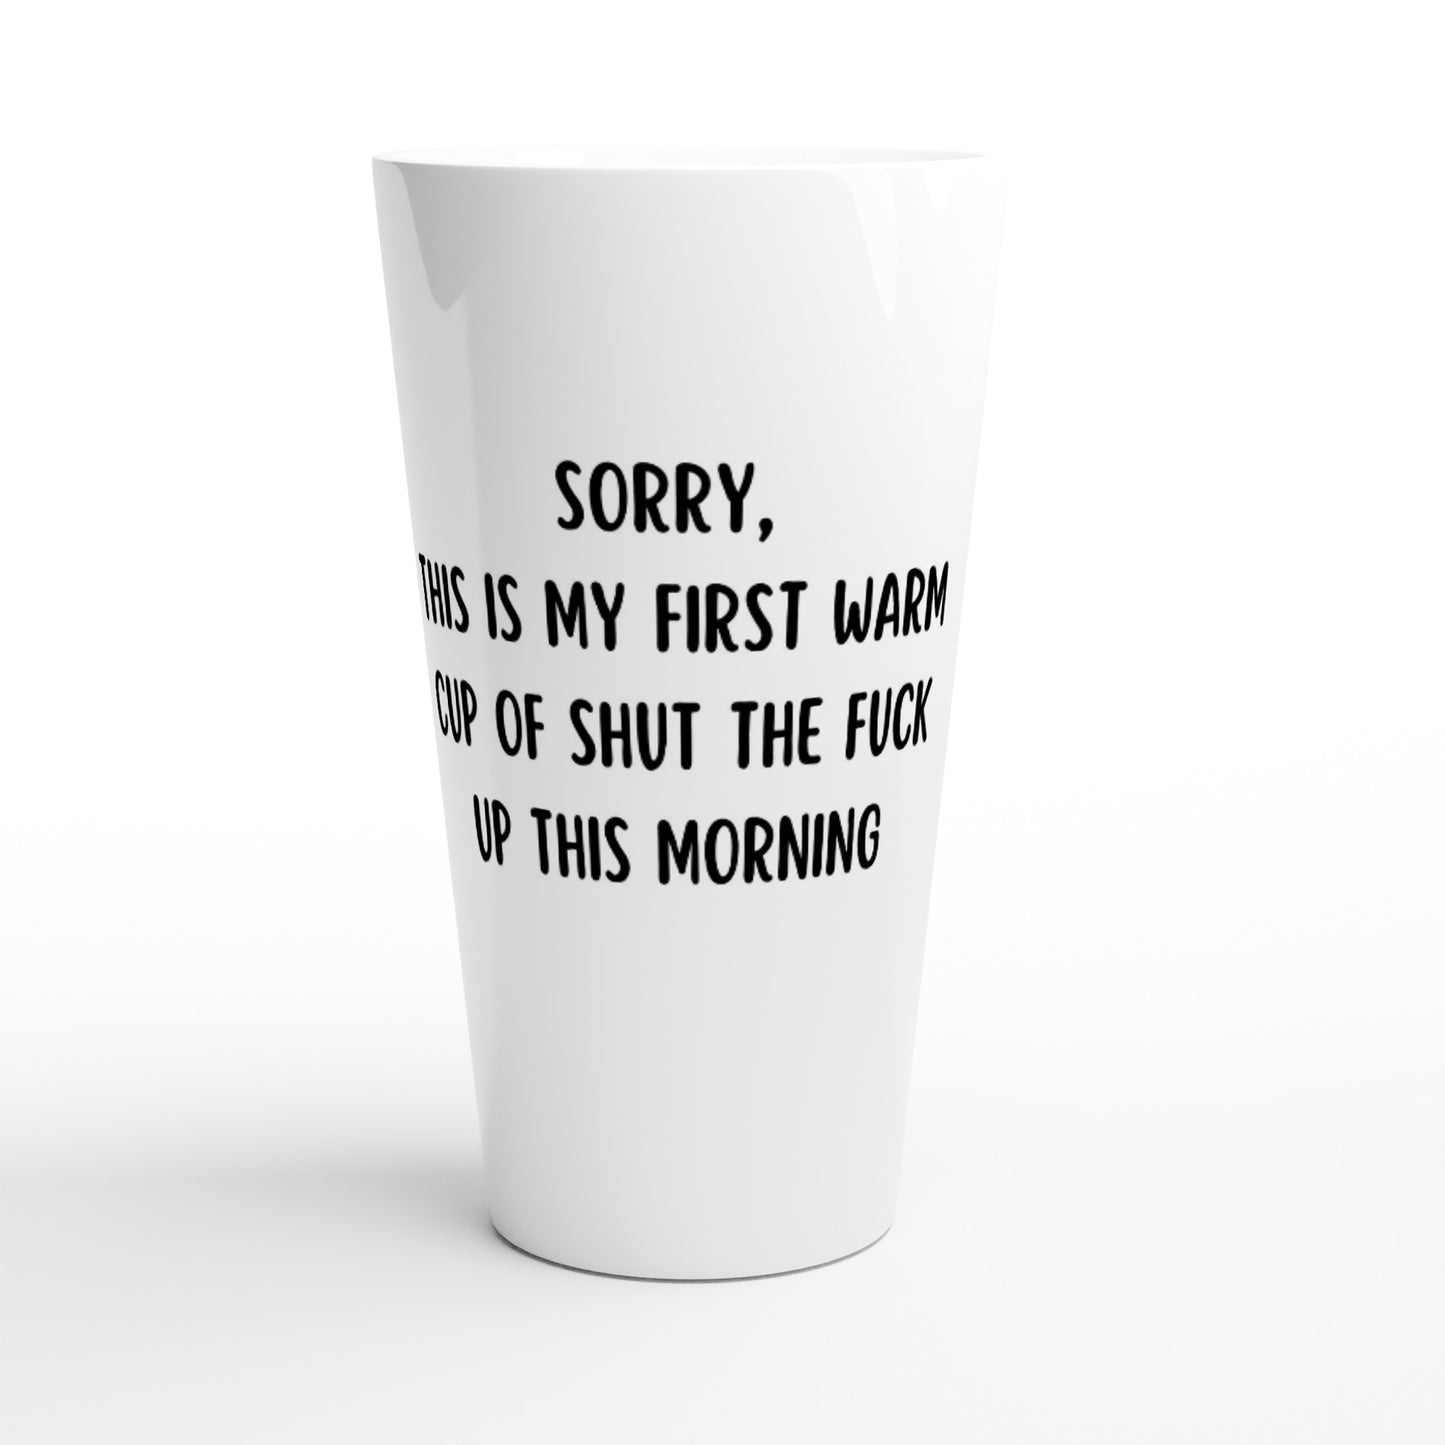 warm cup of shut the fuck up 17oz ceramic mug